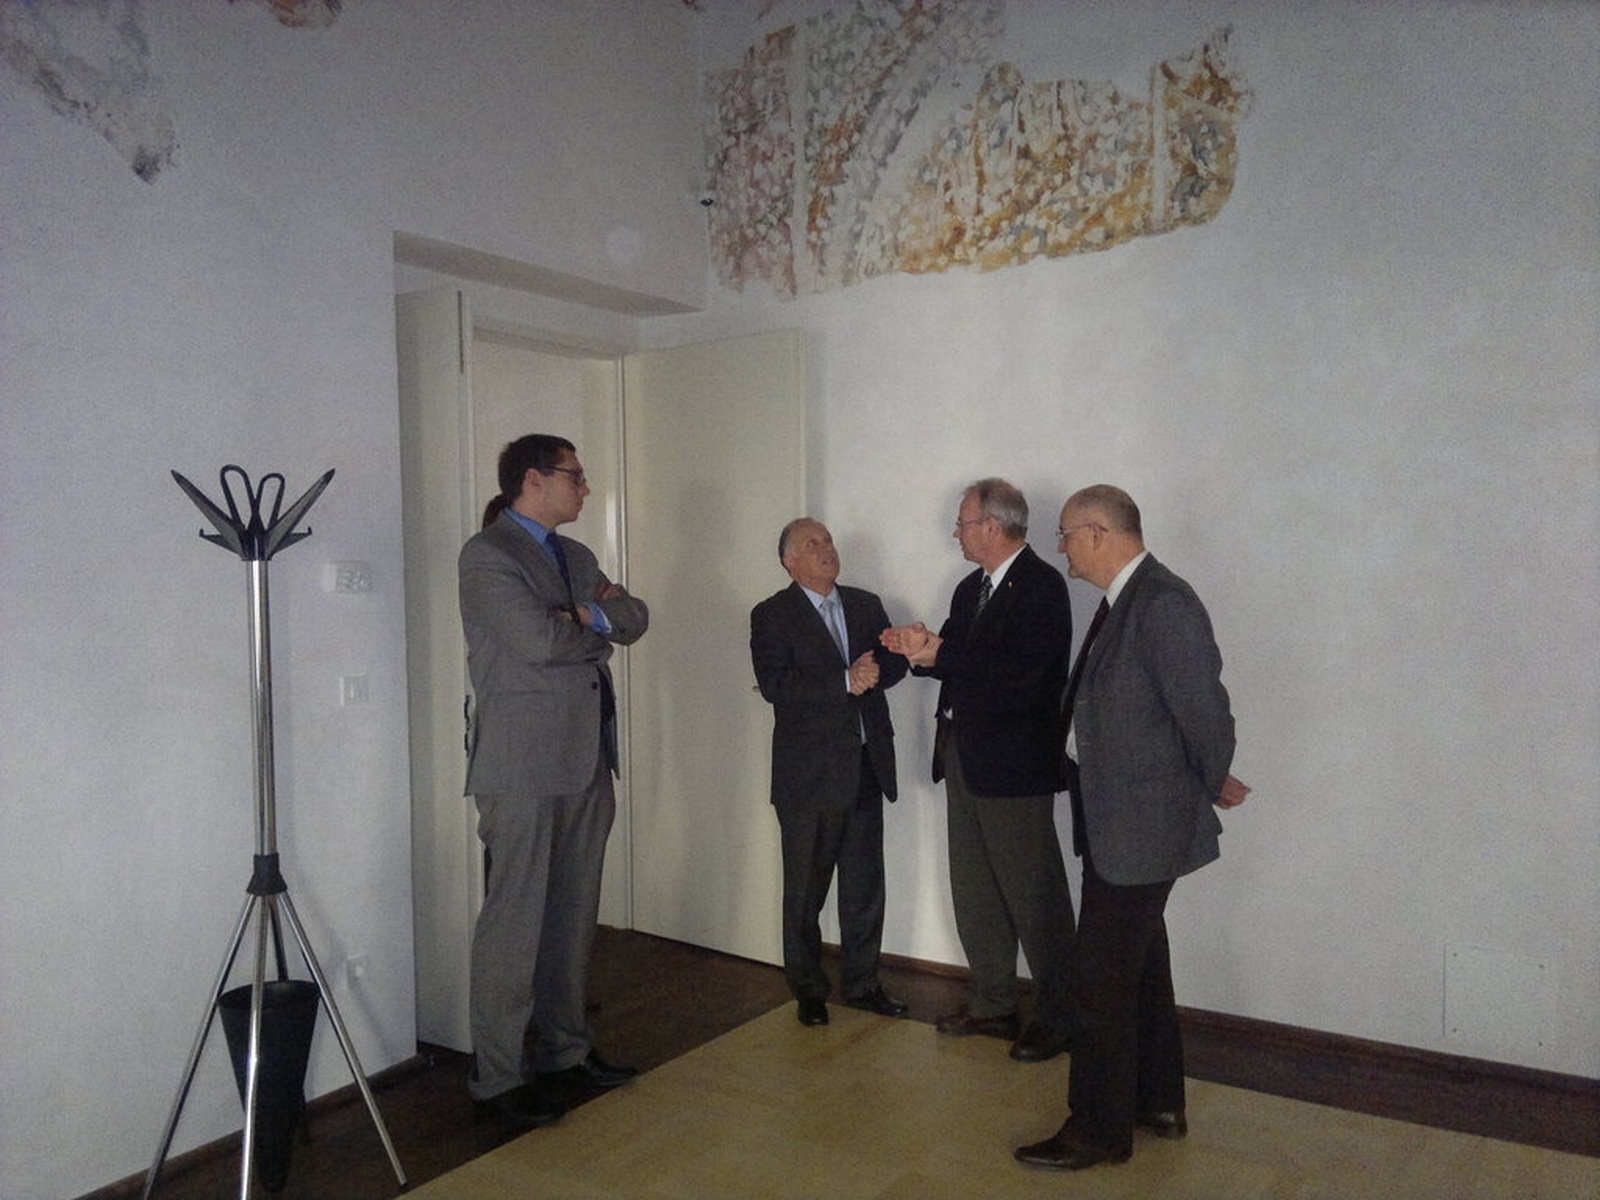 A Visit of the Brazilian Ambassador at the University of Nova Gorica